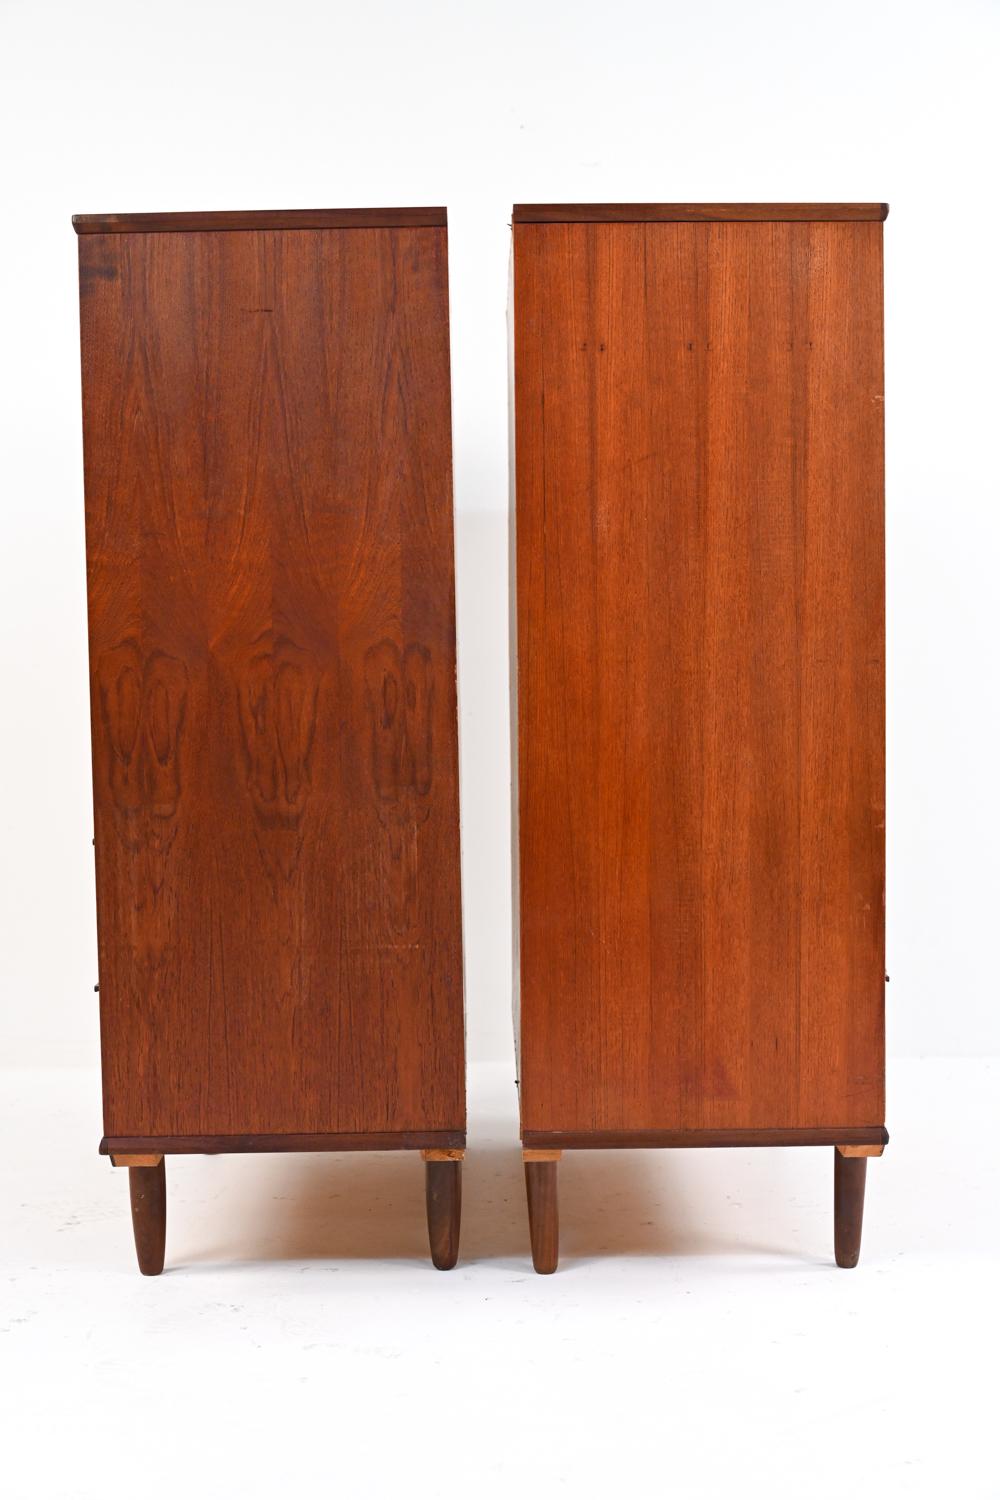 Pair of Danish Modern Teak Tallboy Dressers, c. 1960's For Sale 7